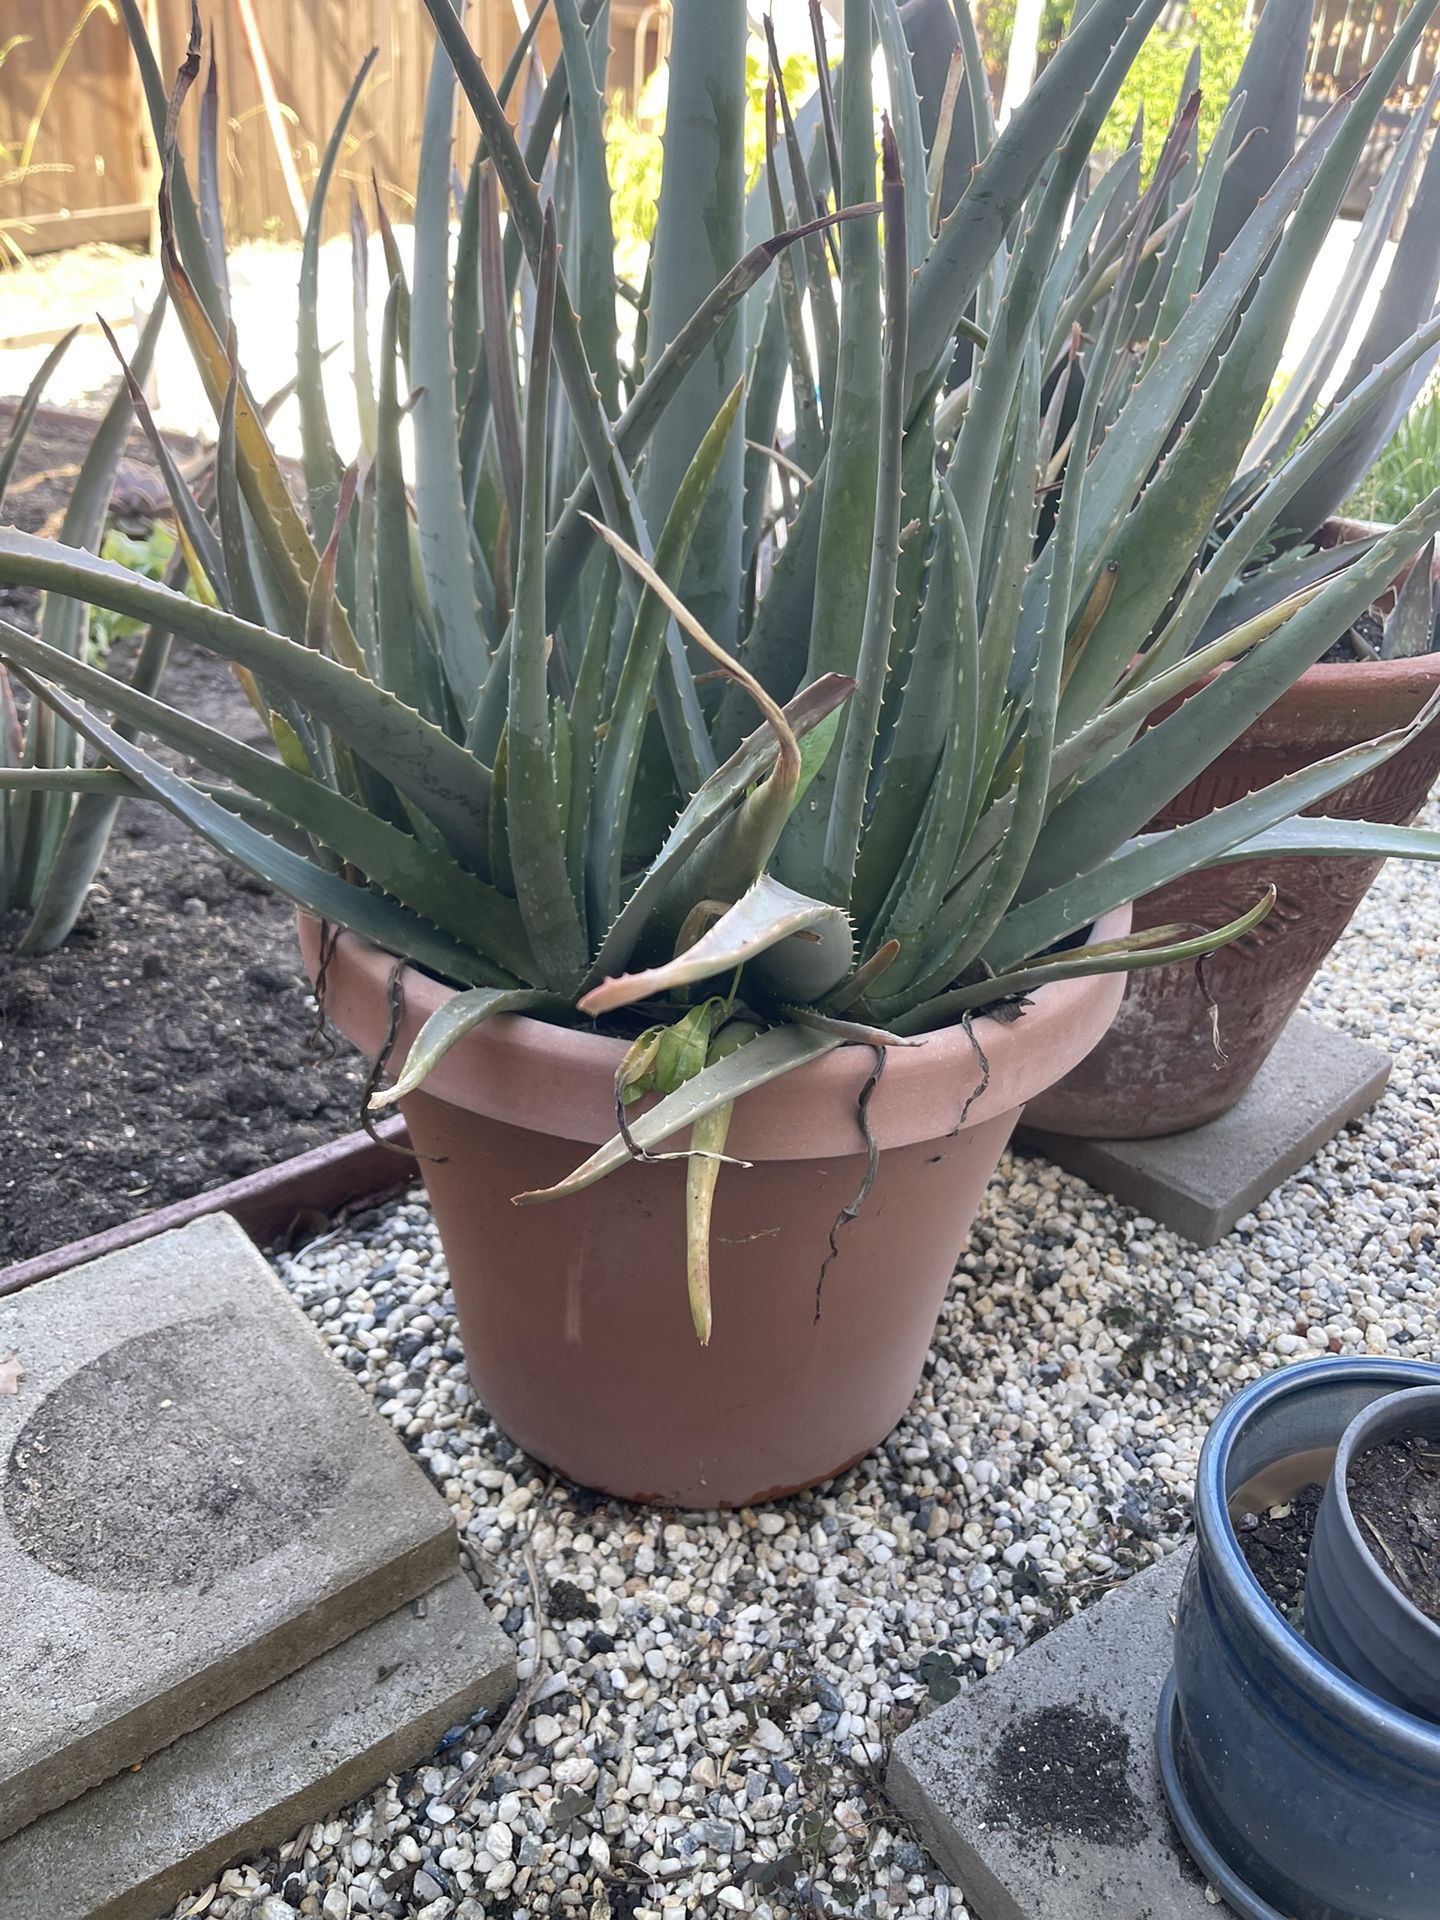 Large Aloe Vera Plant 